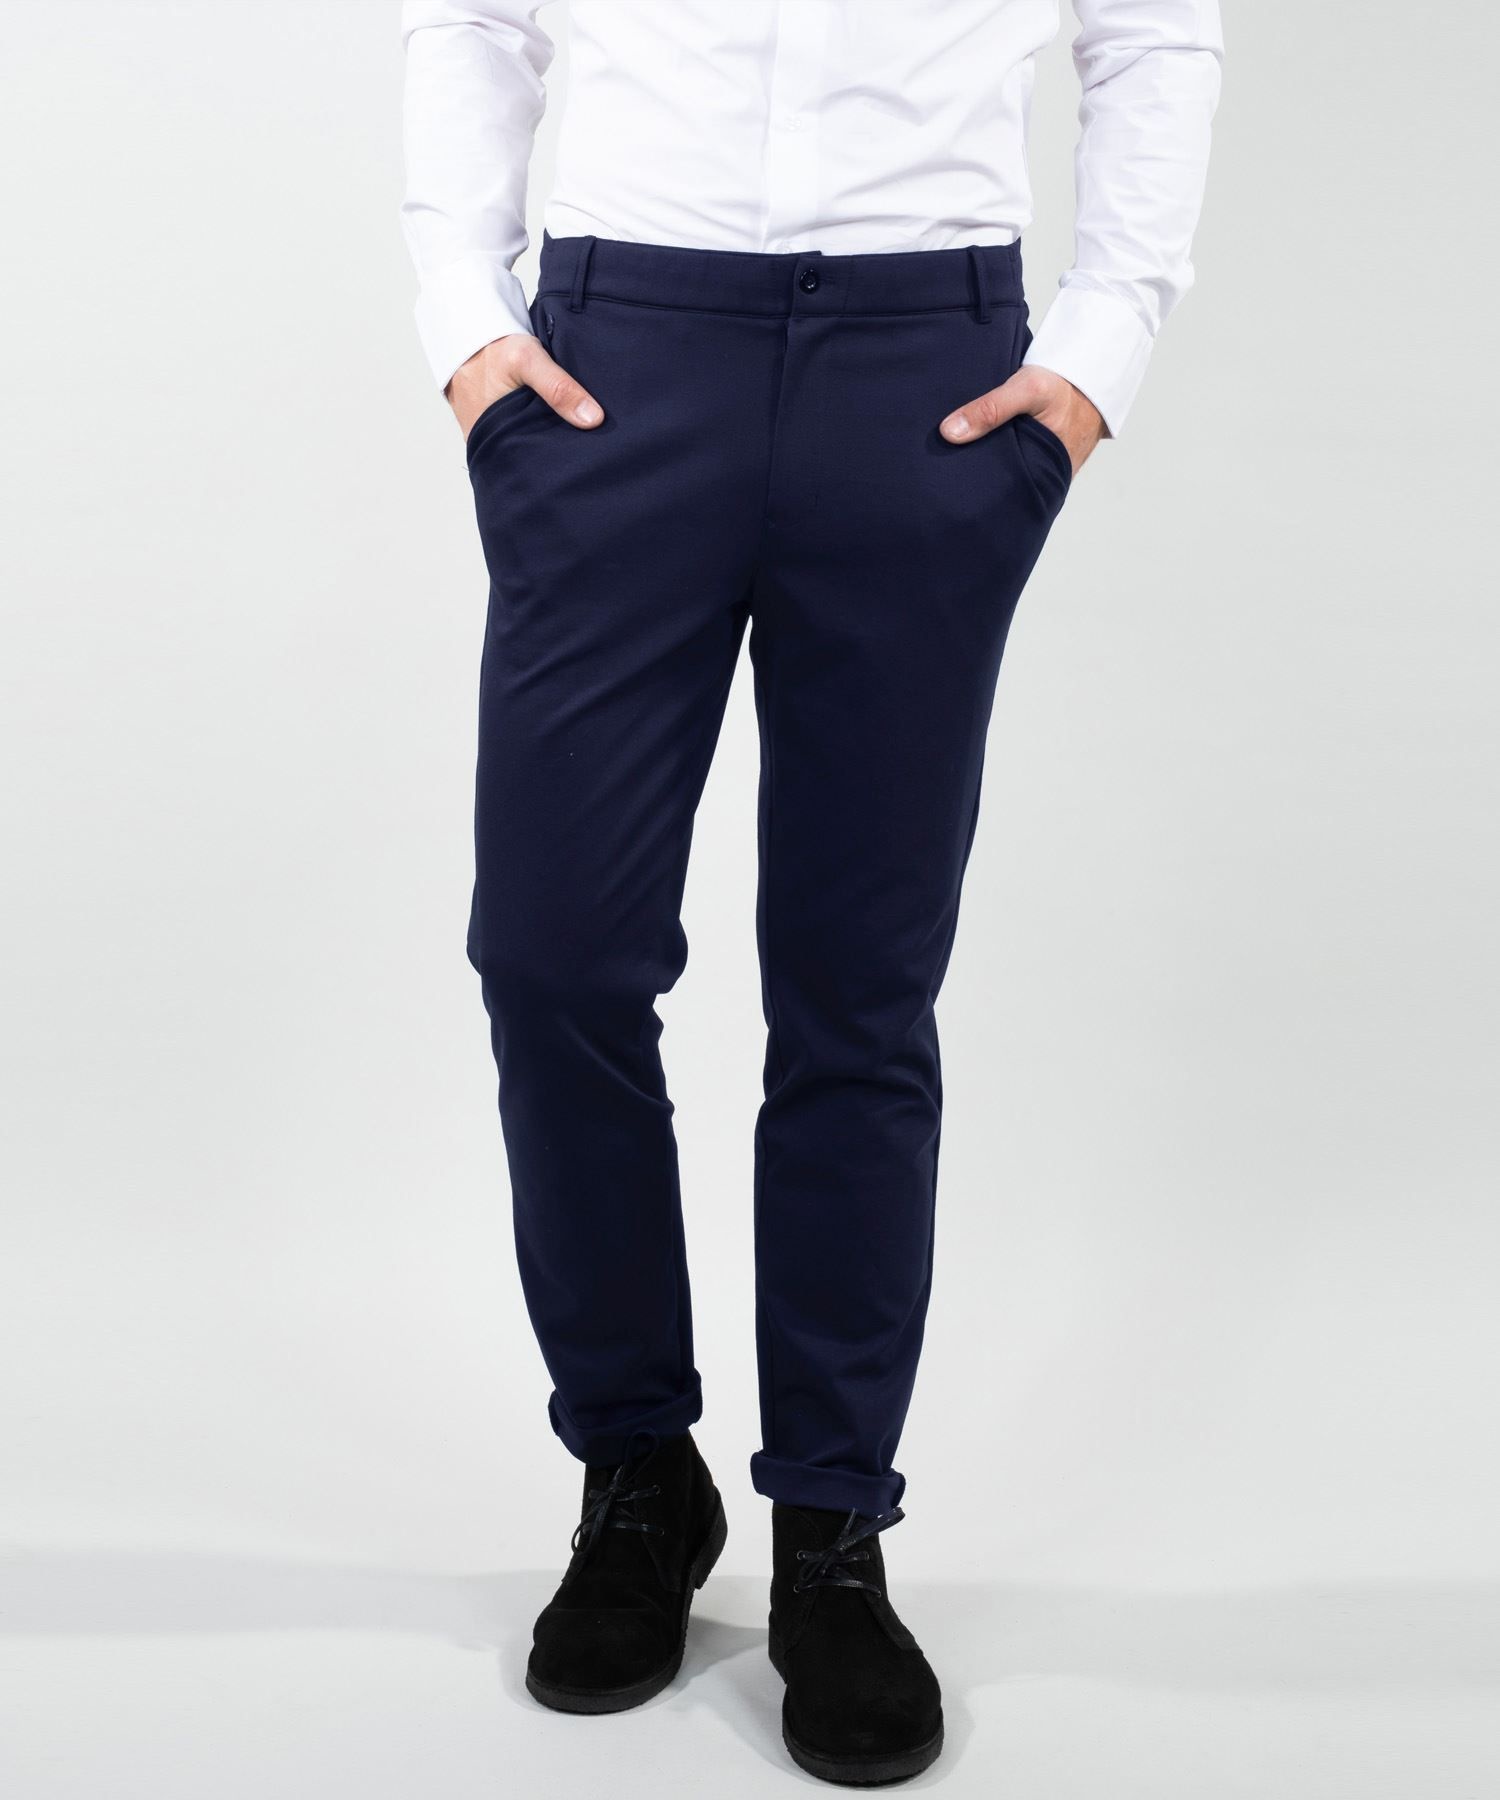 Blauwe Pantalon Heren SAVE 44% - horiconphoenix.com